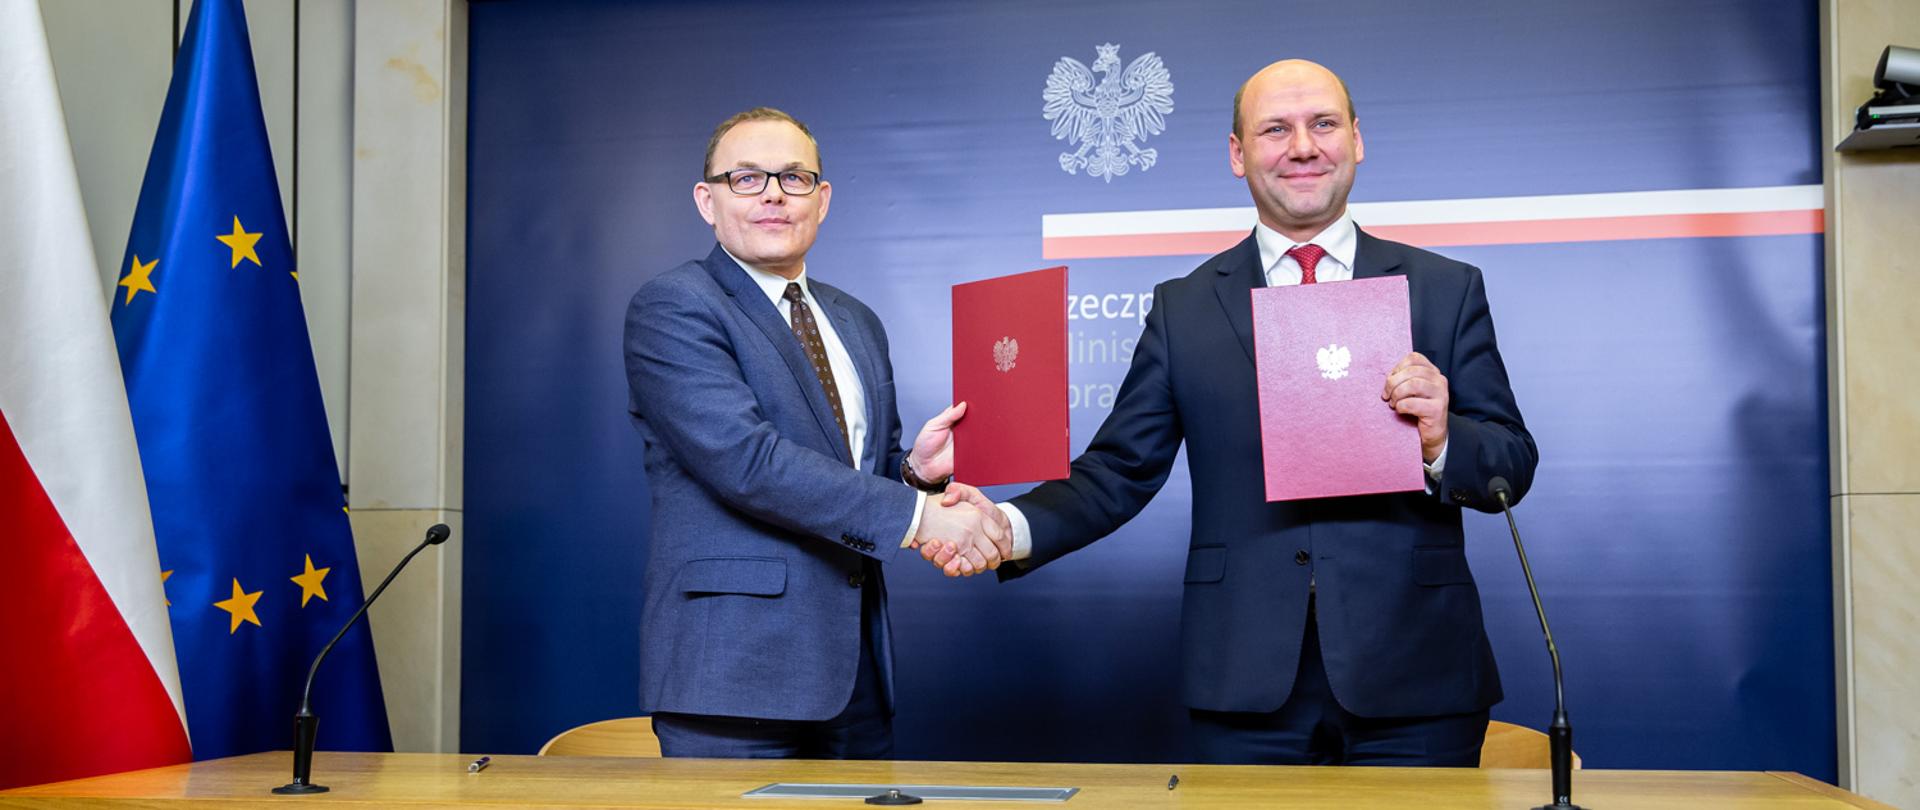 MFA - Polskie Radio S.A. cooperation agreement